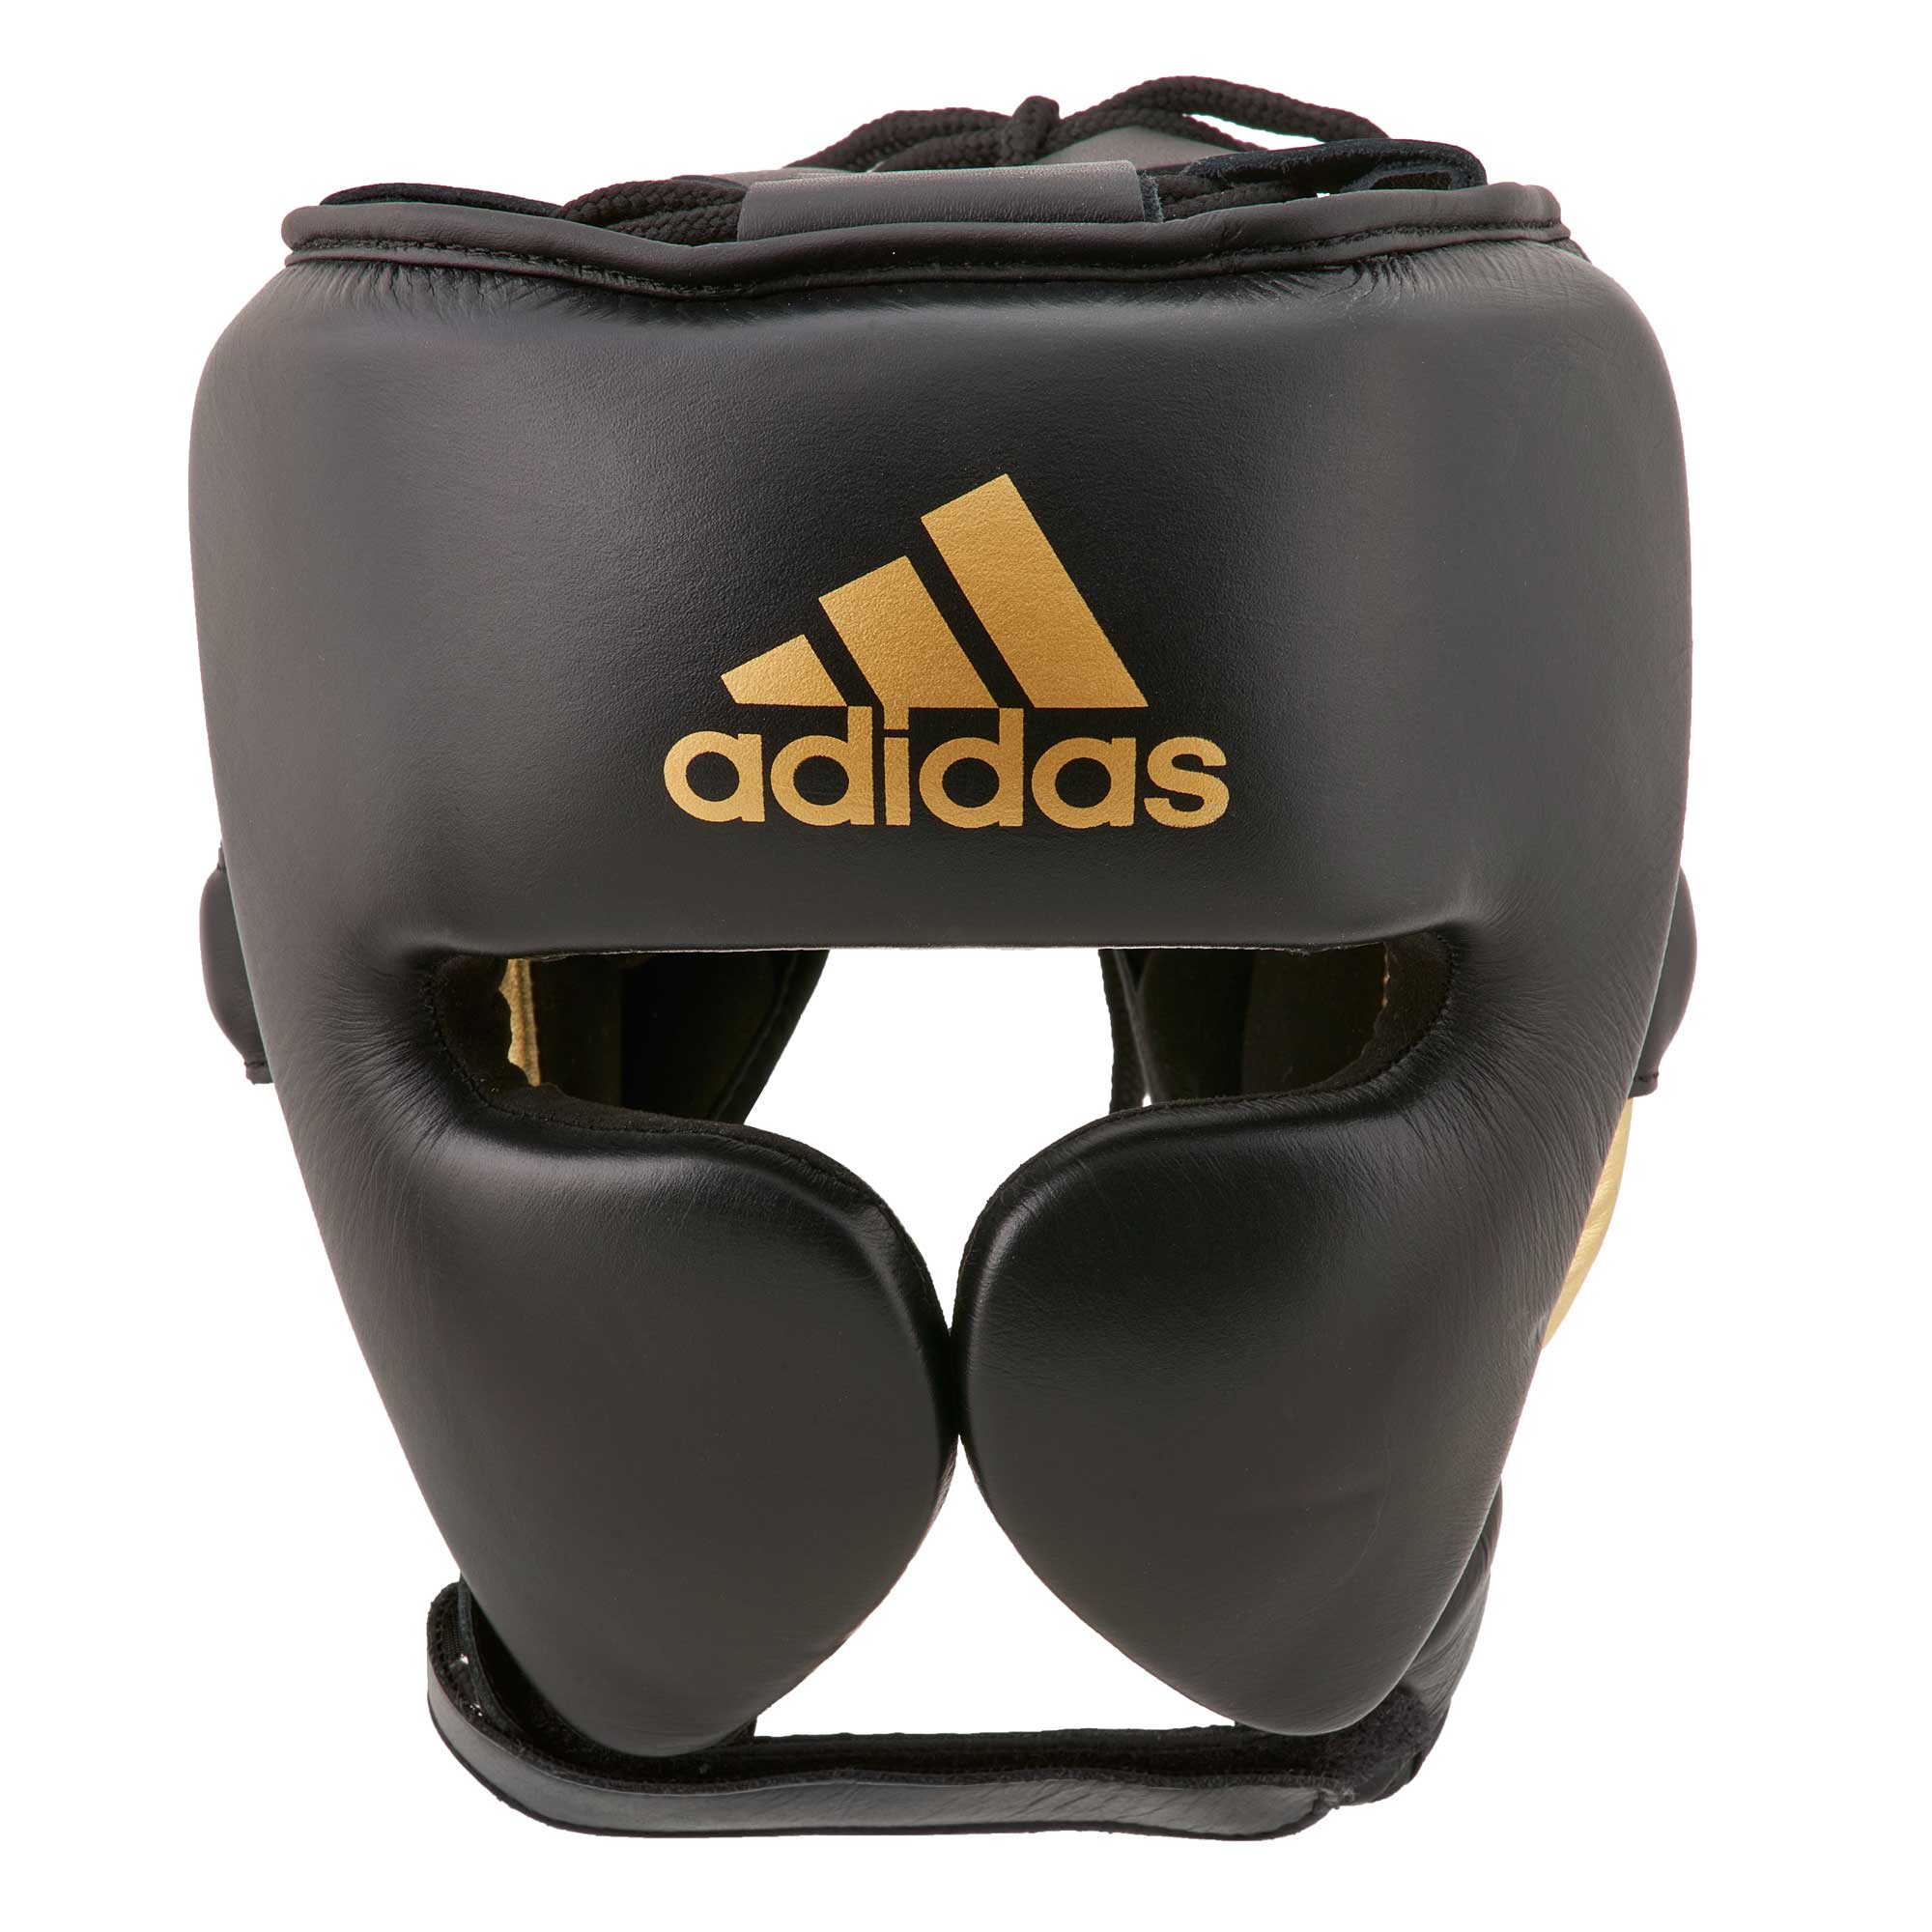 Kickboxing Protective Equipment